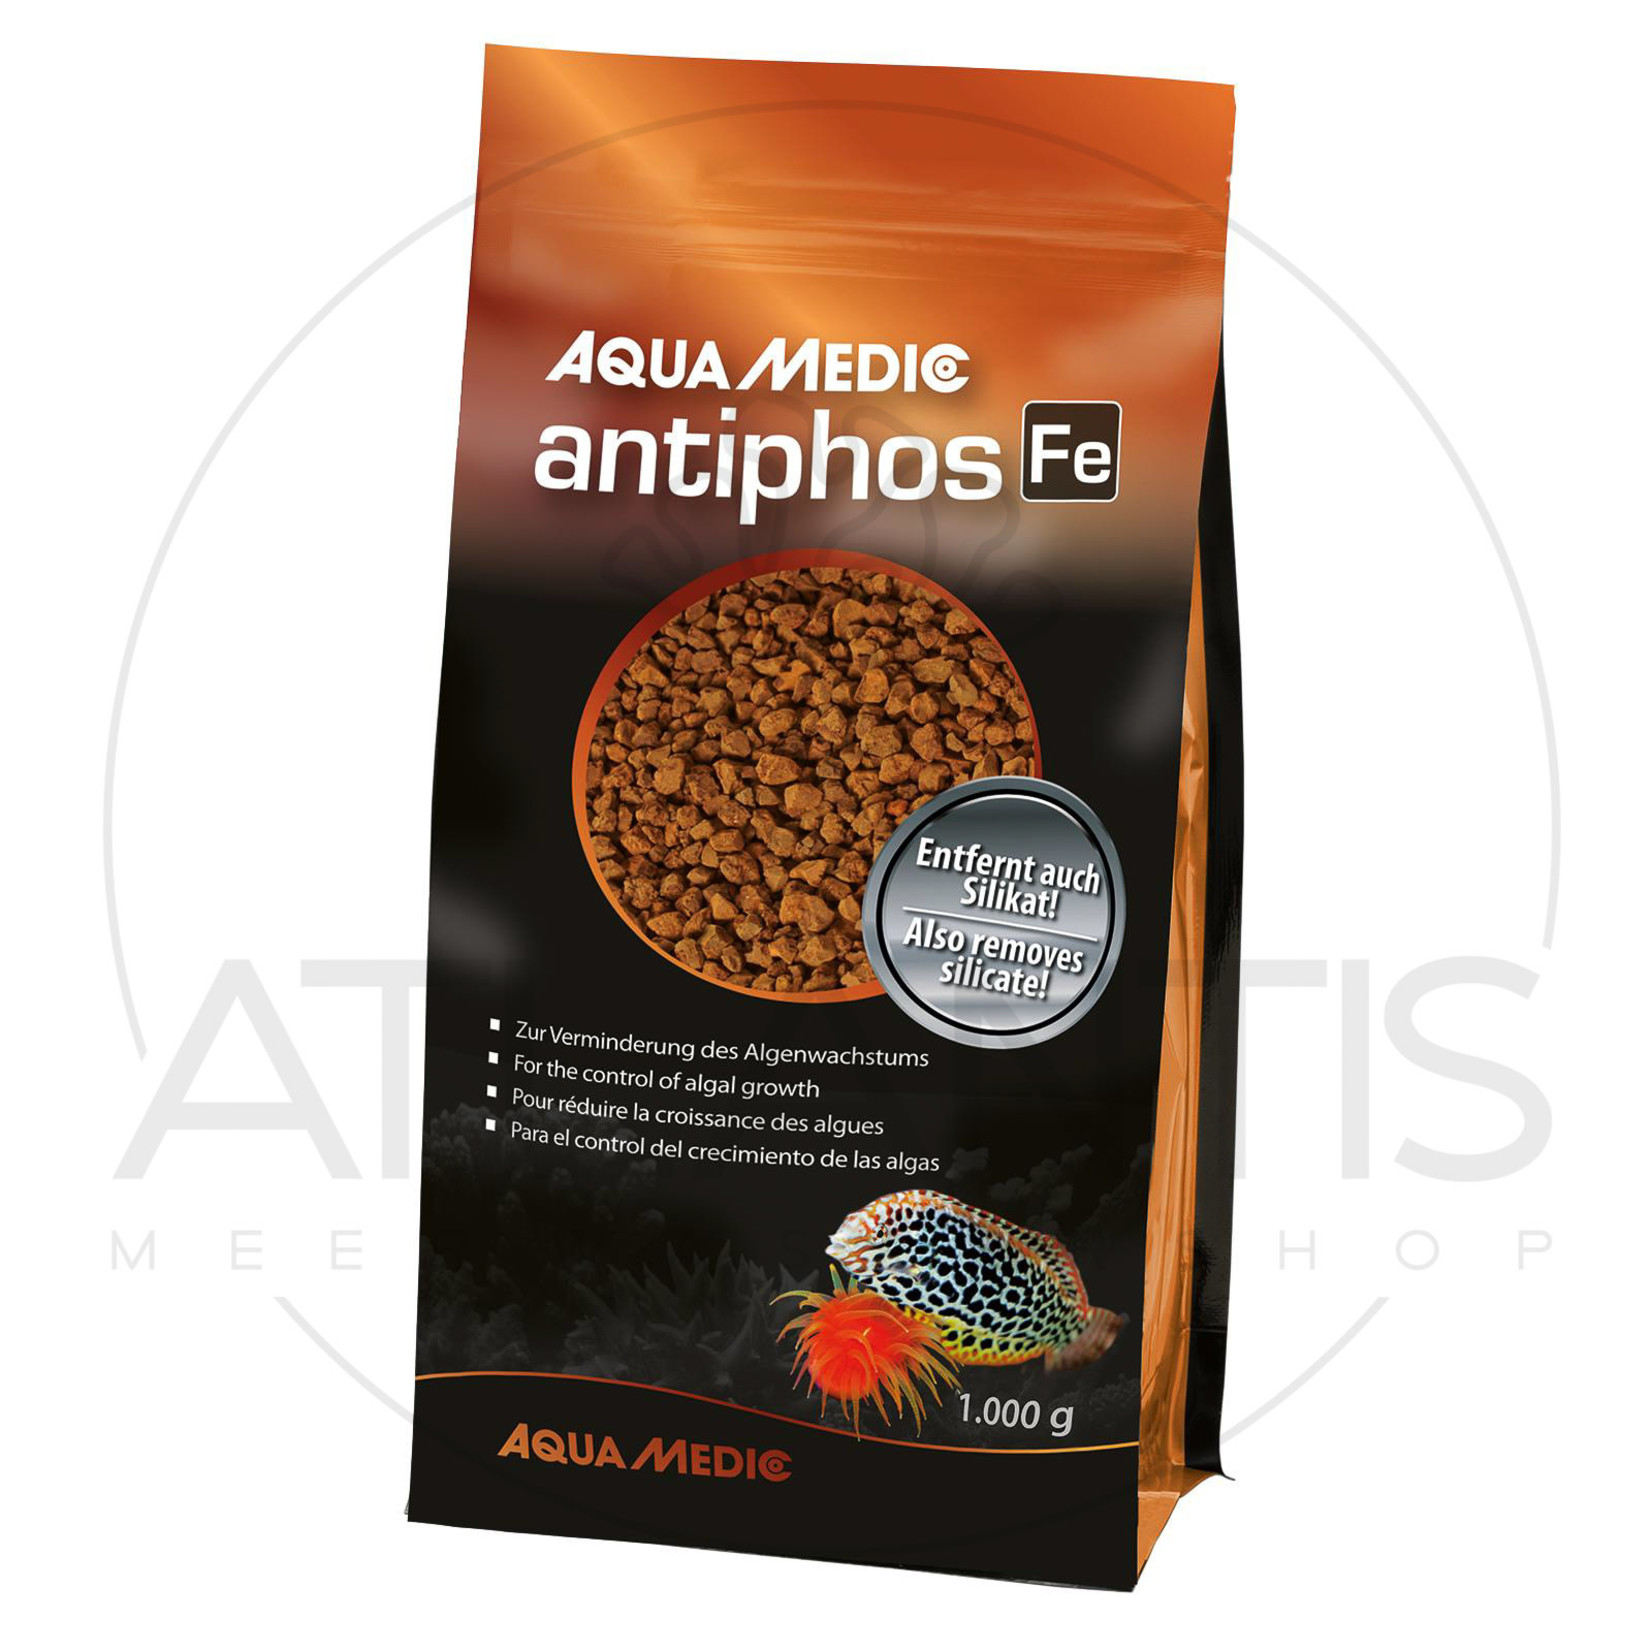 Aqua Medic antiphos Fe 1000 g - app. 1600 ml